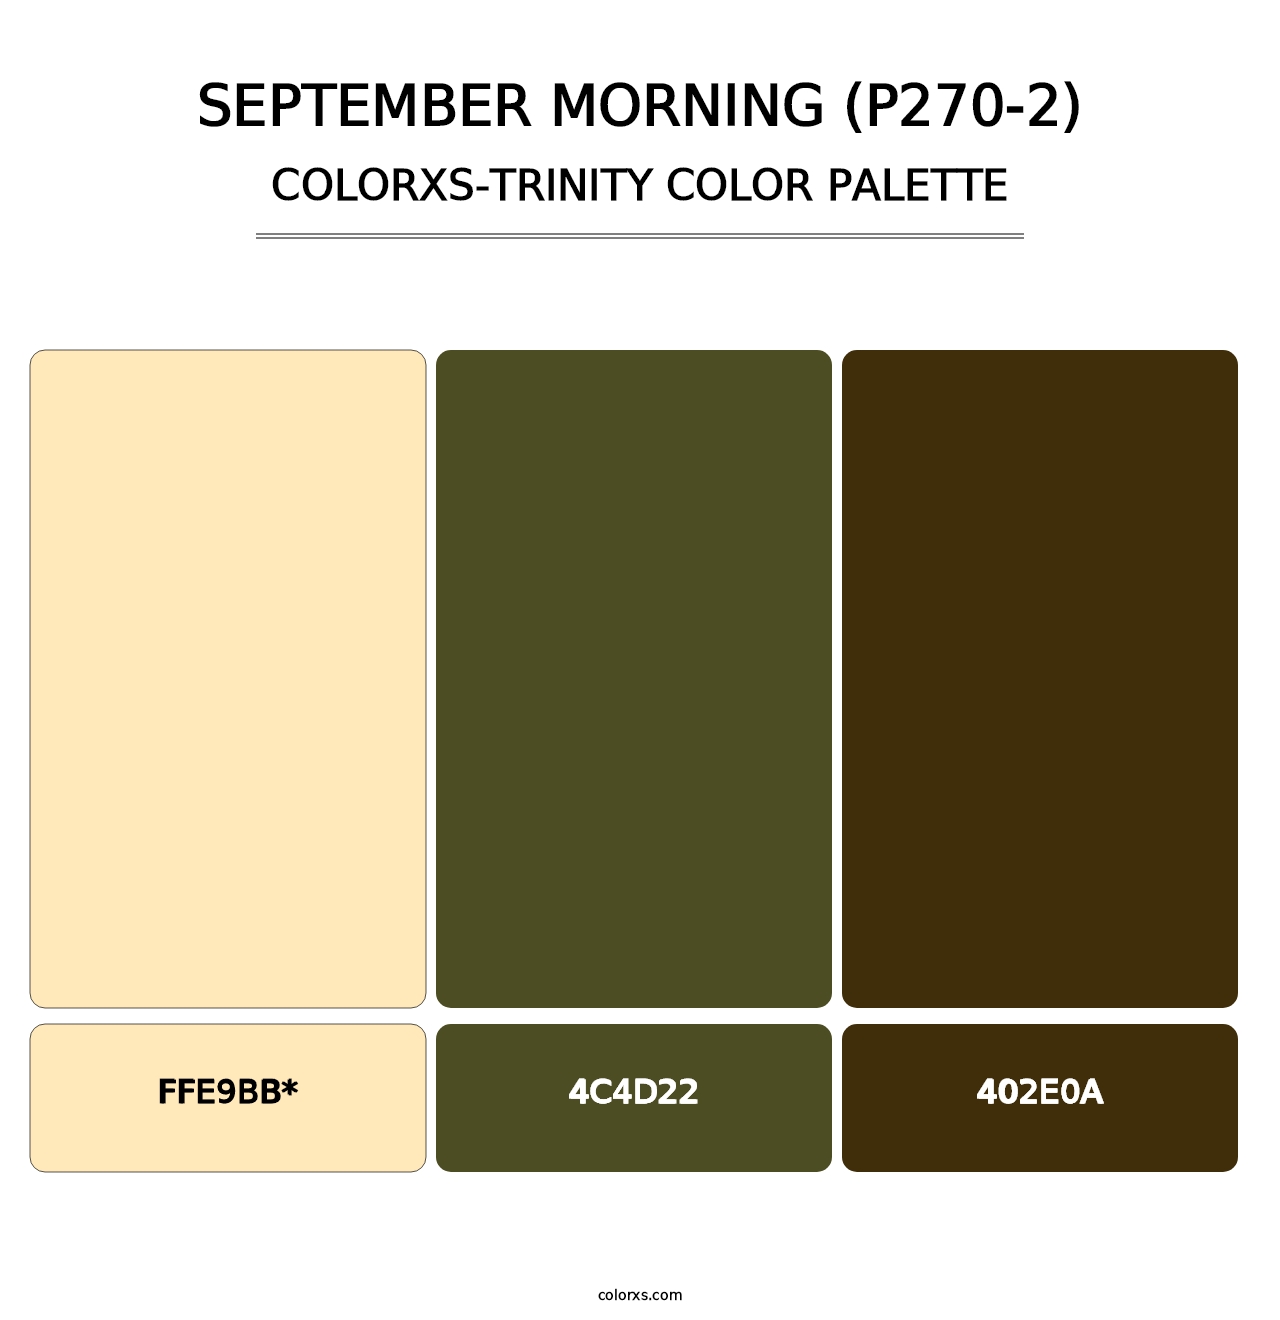 September Morning (P270-2) - Colorxs Trinity Palette